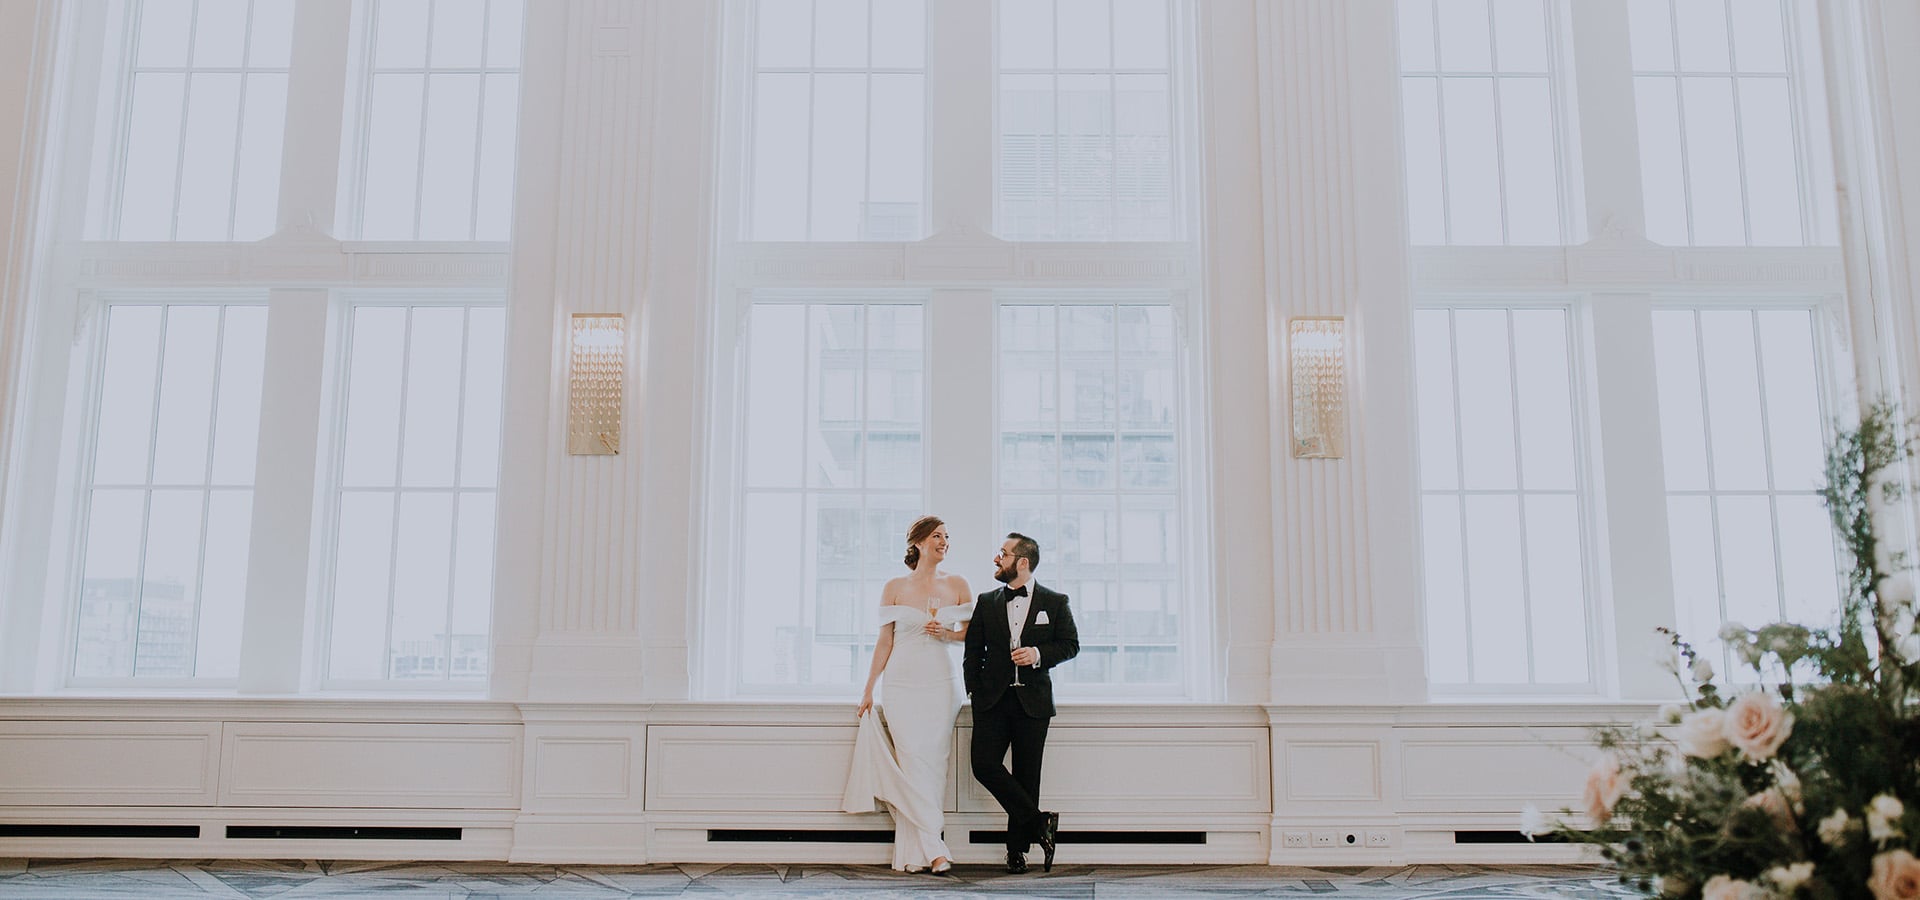 Hero image for Sarah and Andrew’s Enchanting Wedding at the King Edward Hotel